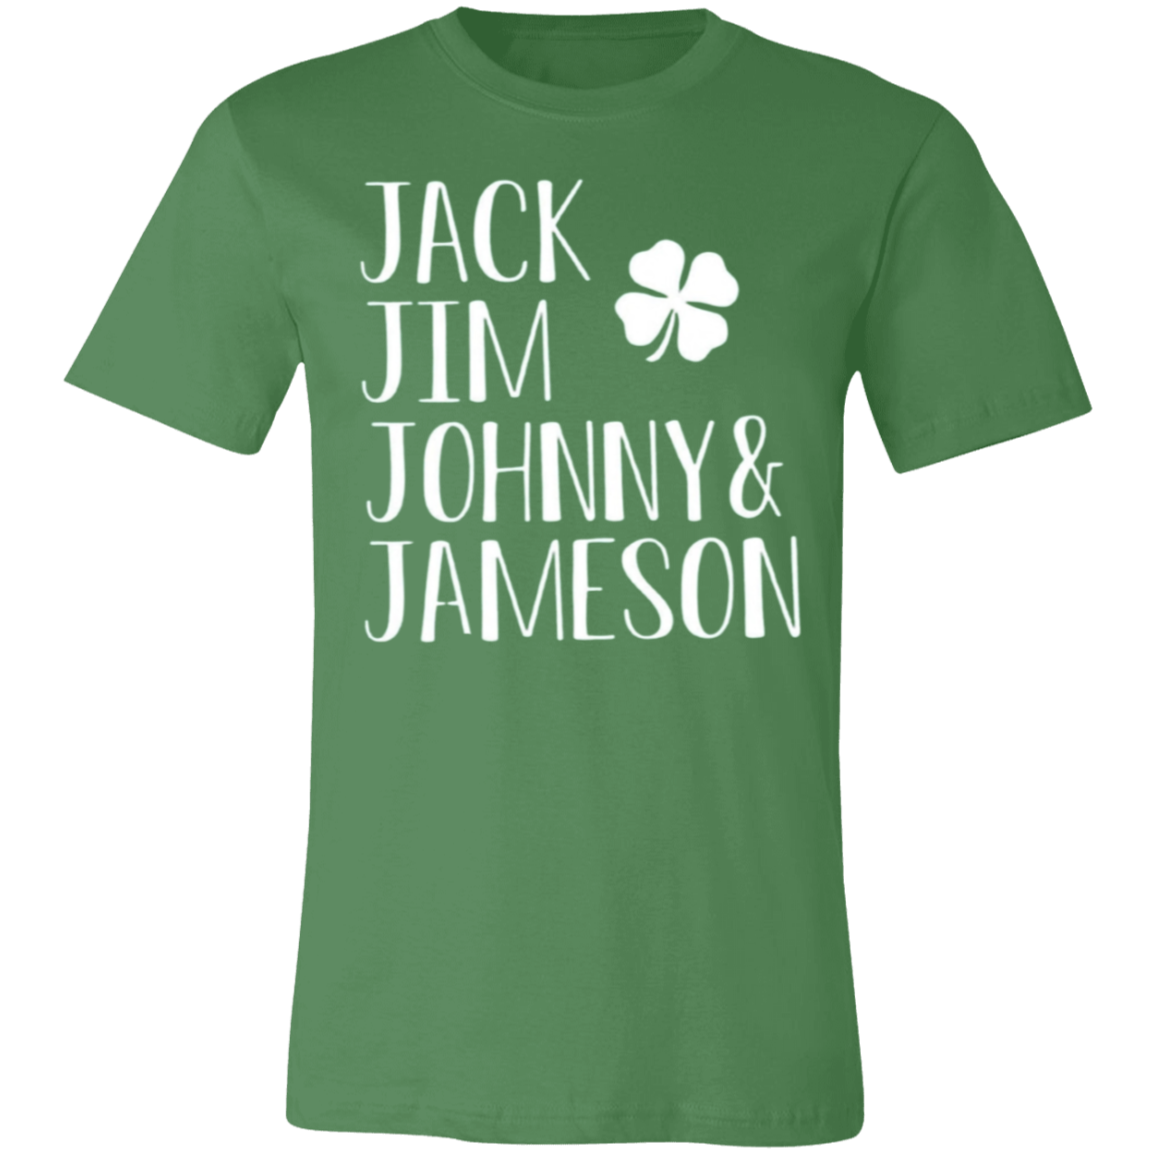 Jack Jim Johnny & Jameson Tee